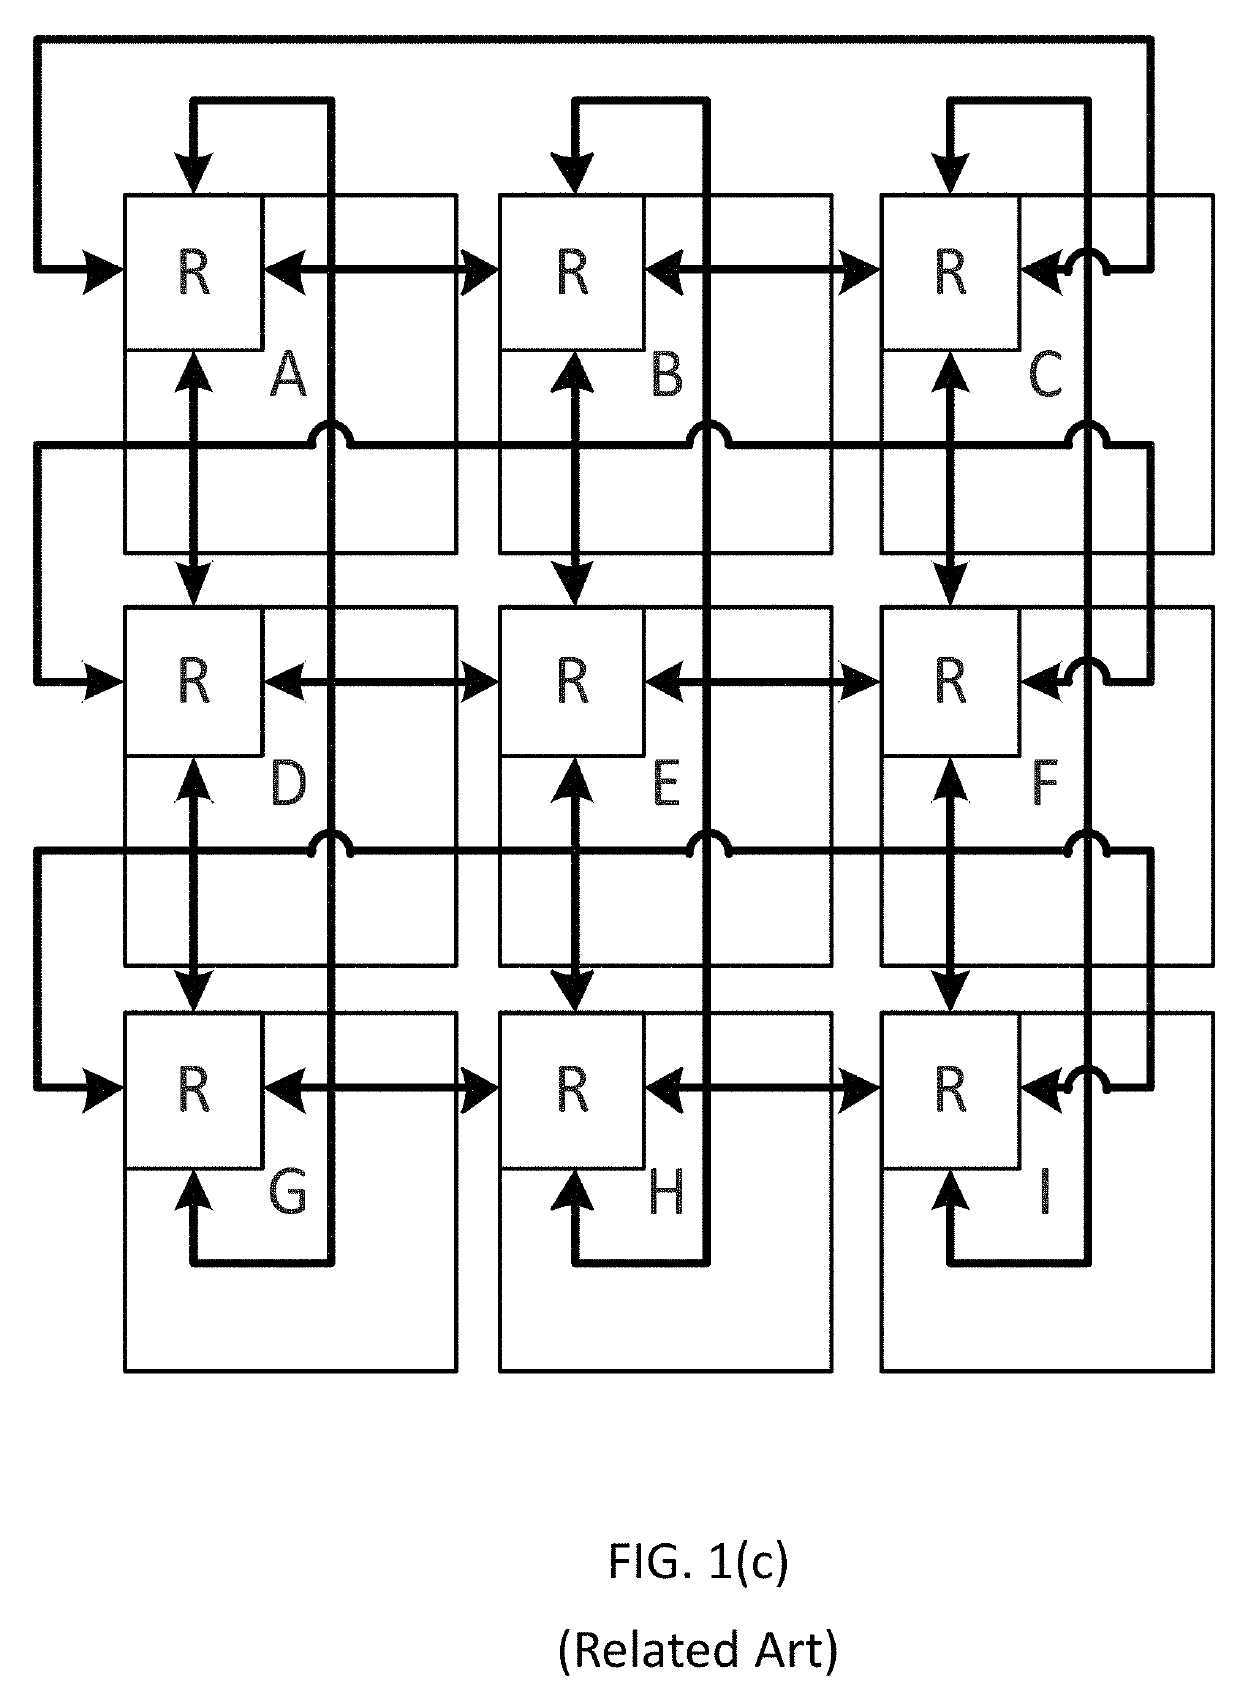 Backbone network-on-chip (NOC) for field-programmable gate array (FPGA)